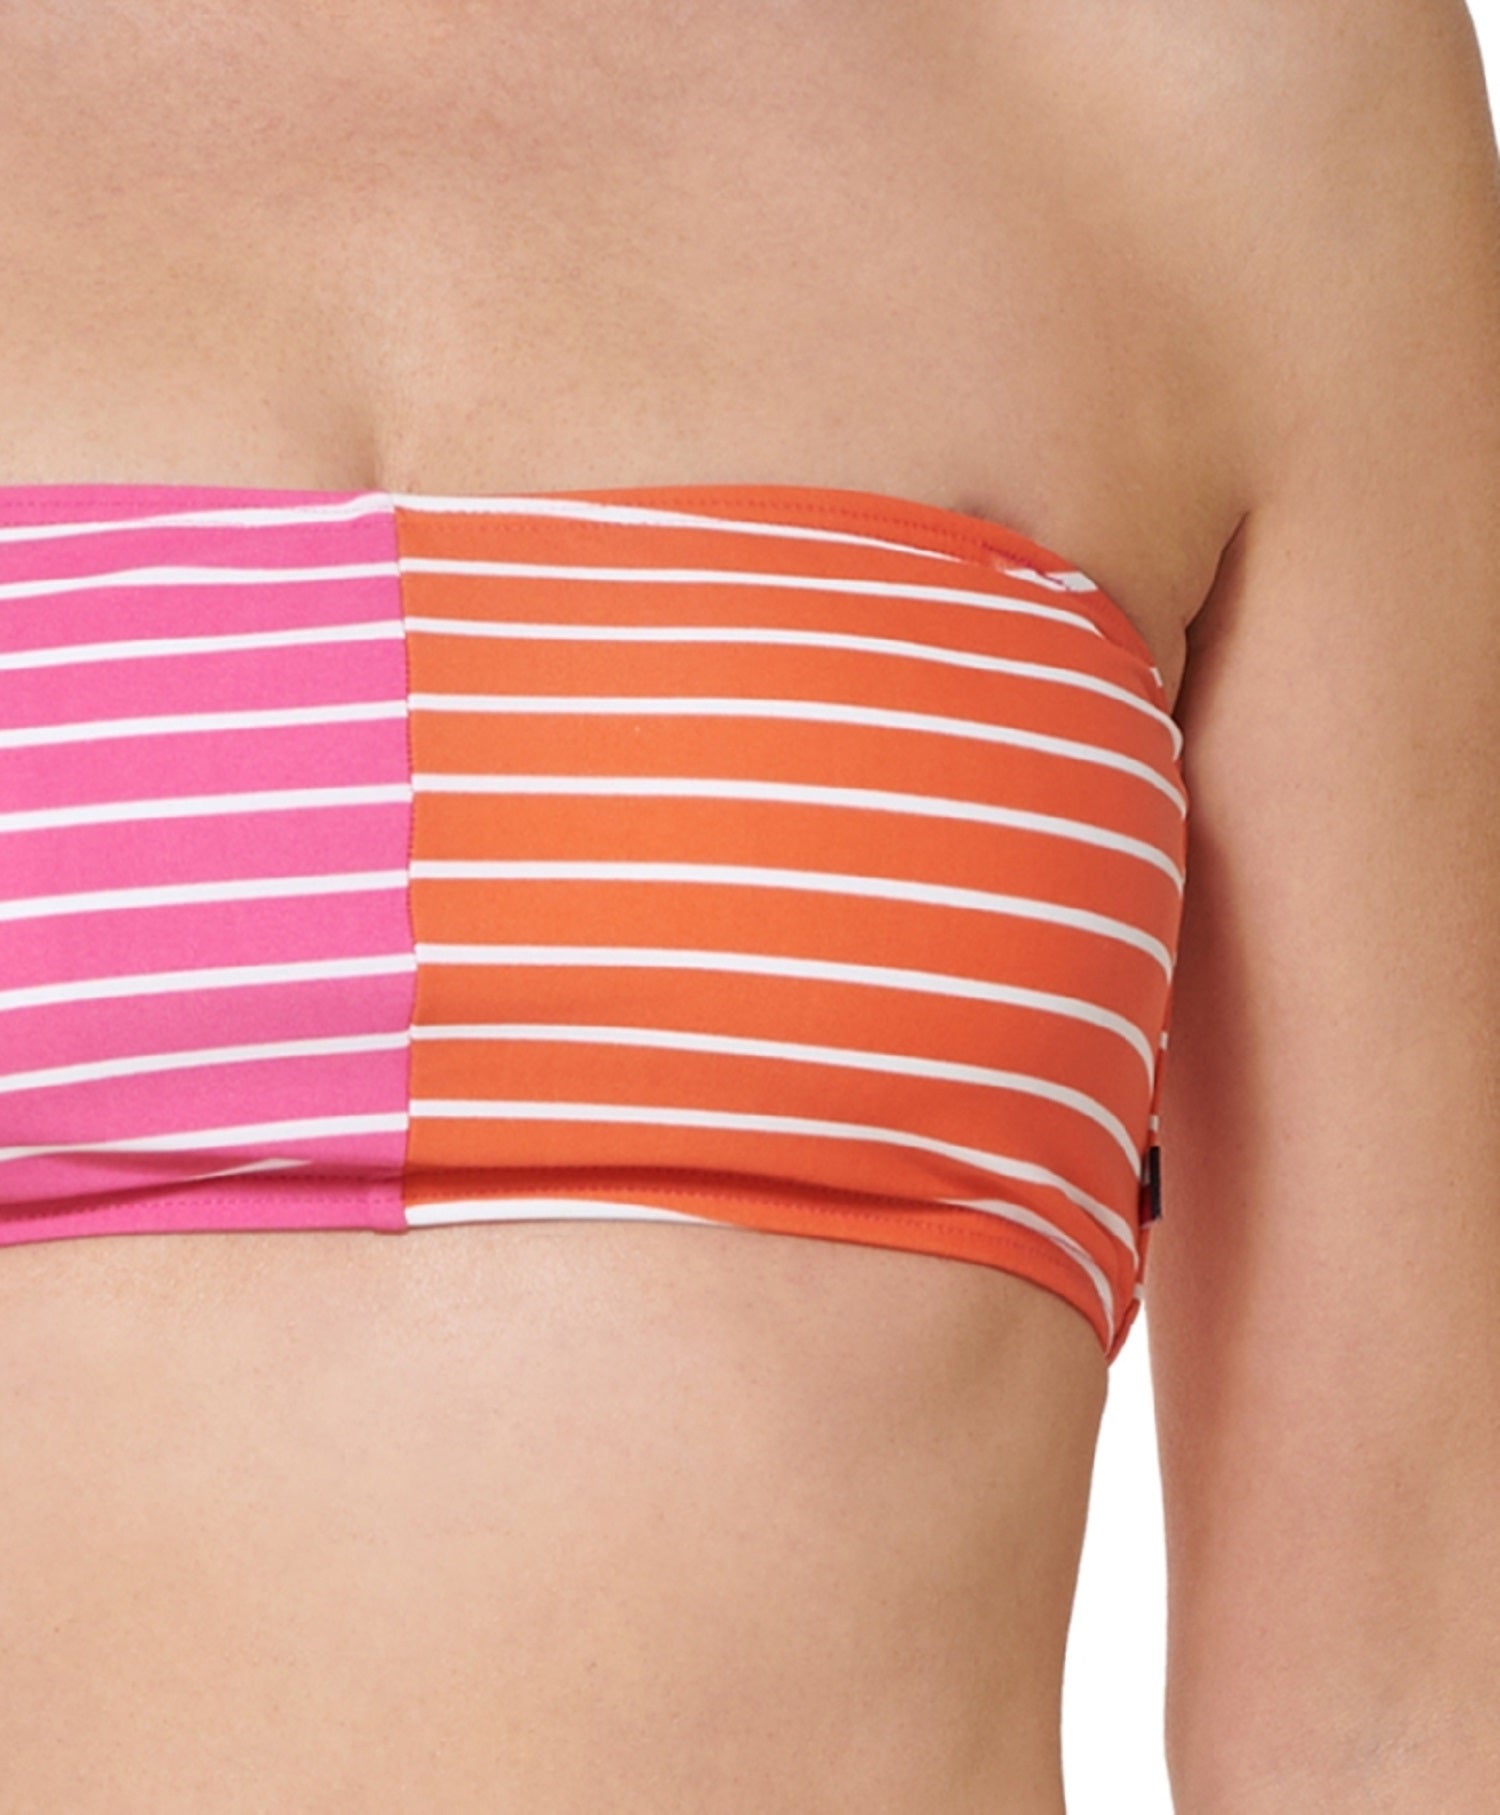  Tommy Hilfiger Women's Striped Bandeau Bikini Bra Top